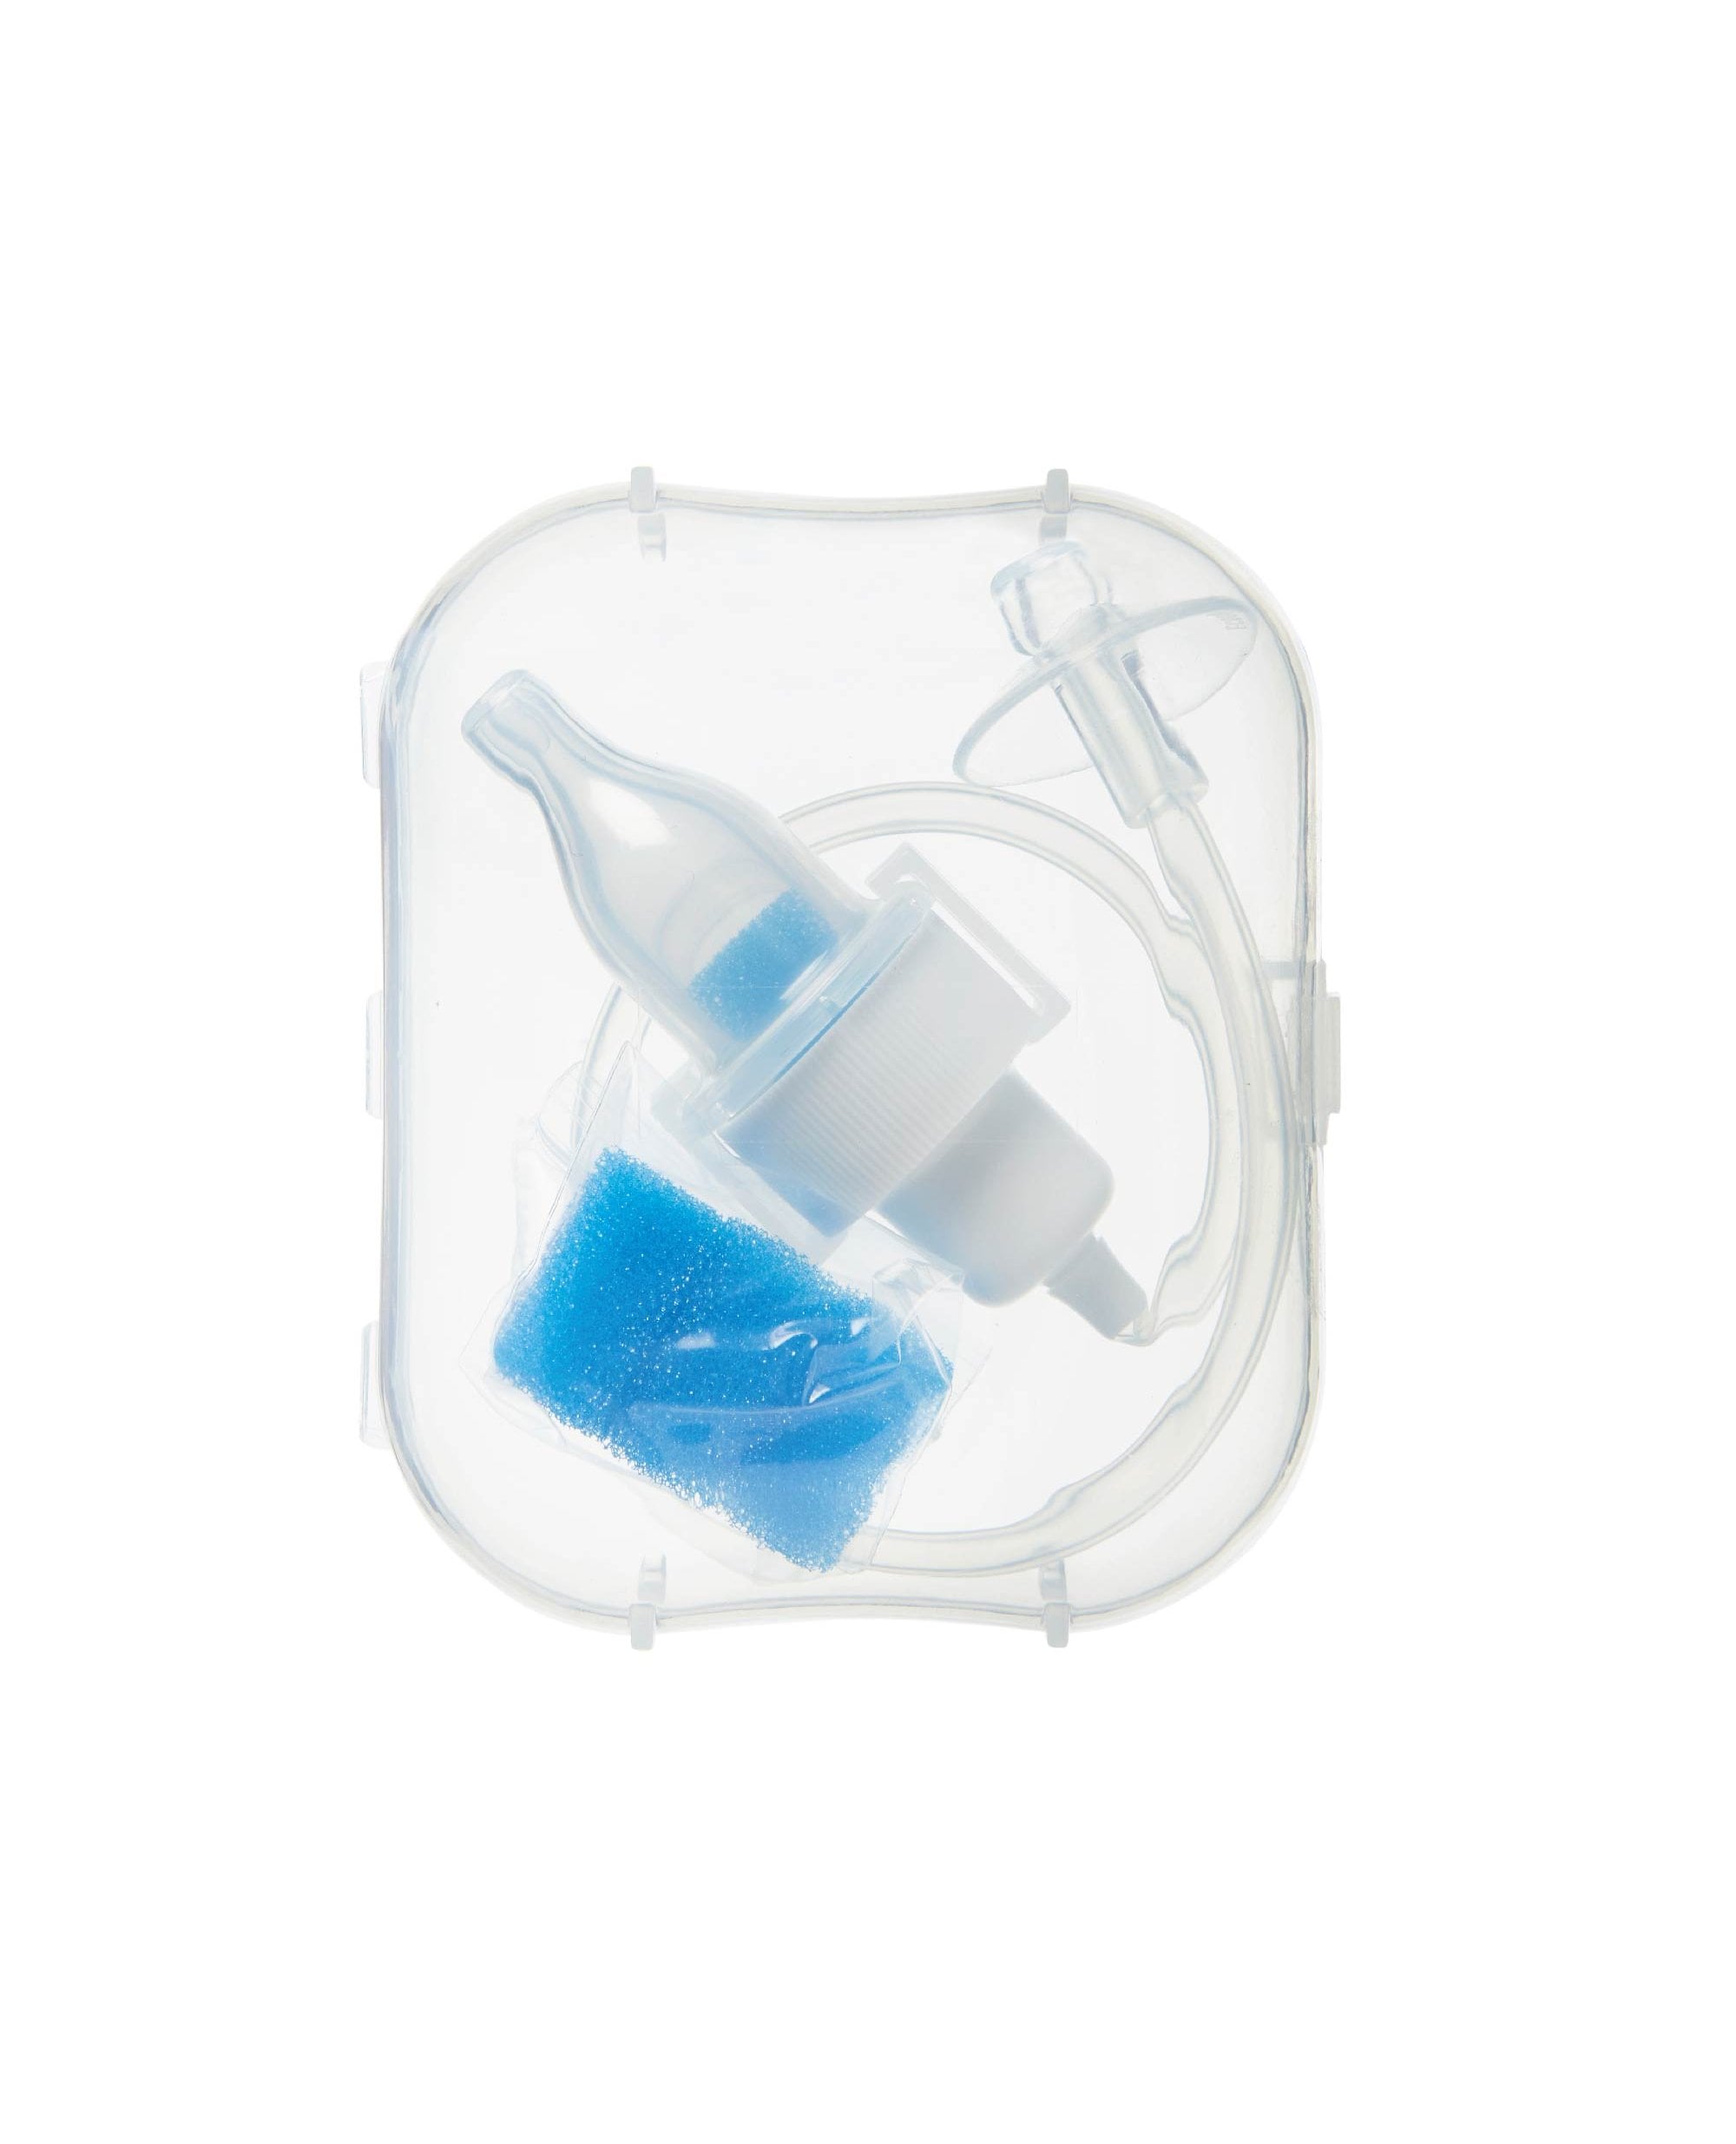 Nuby Medical Breathe-eez Infant Nasal Aspirator Hygenic Travel Case (Tag  Damage)